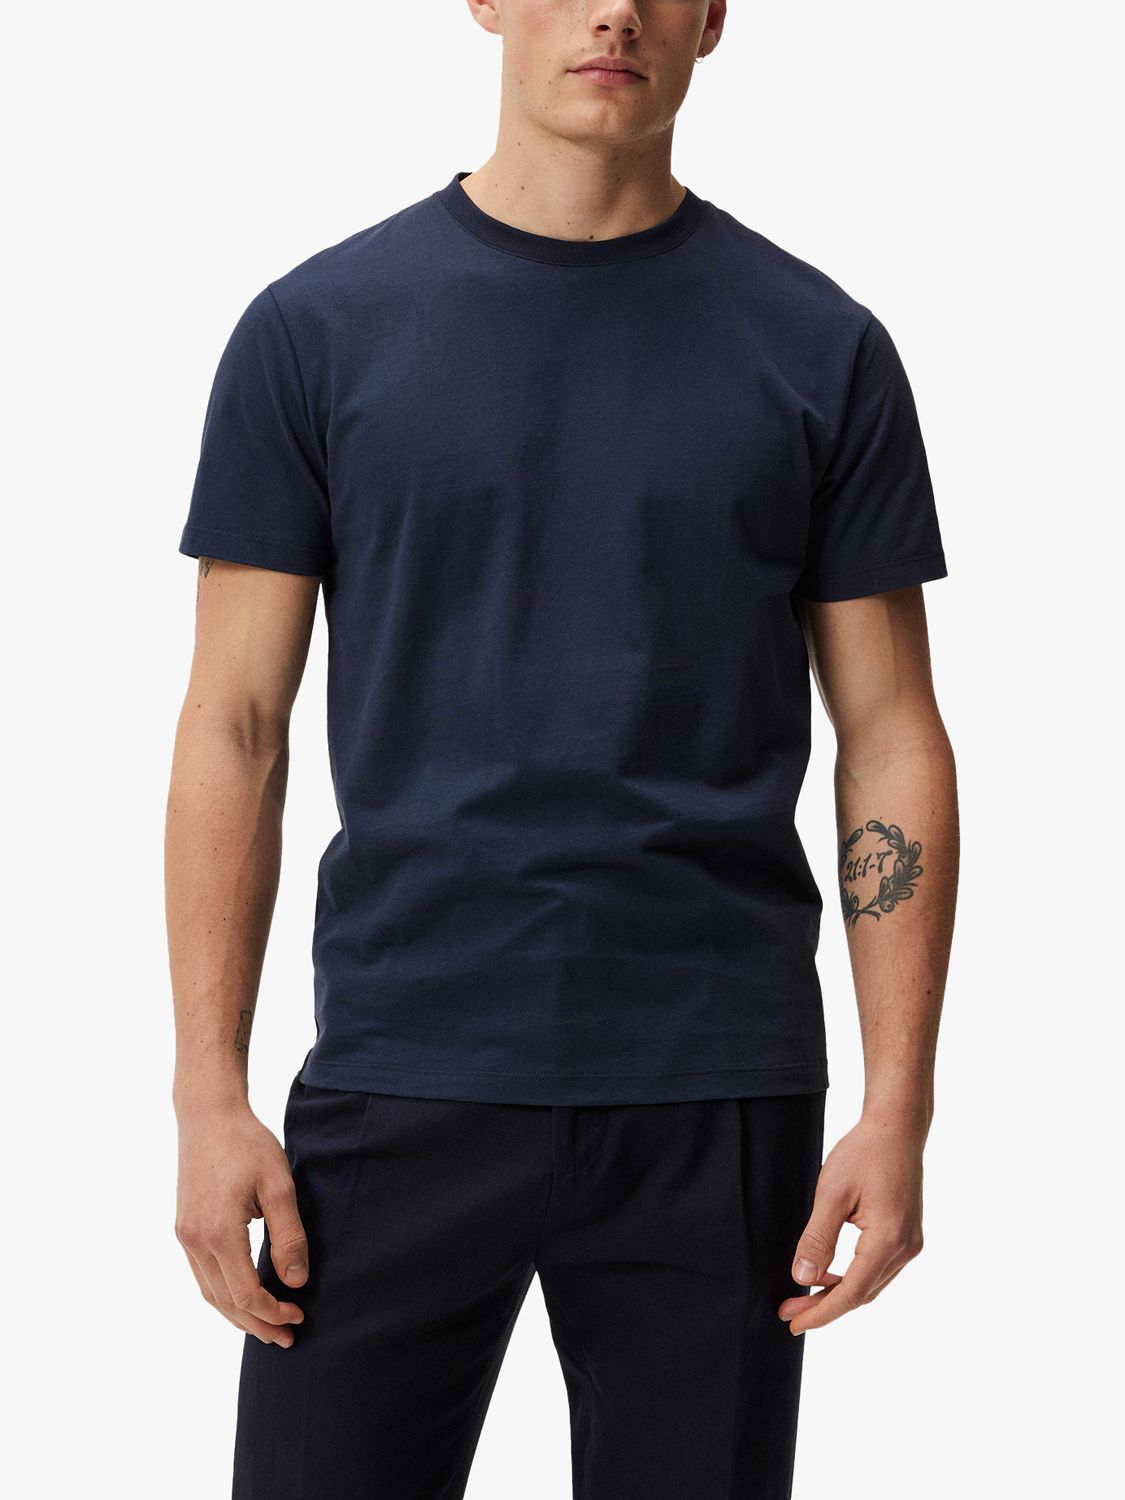 J.Lindeberg Sid Basic T-Shirt, Jl Navy at John Lewis & Partners